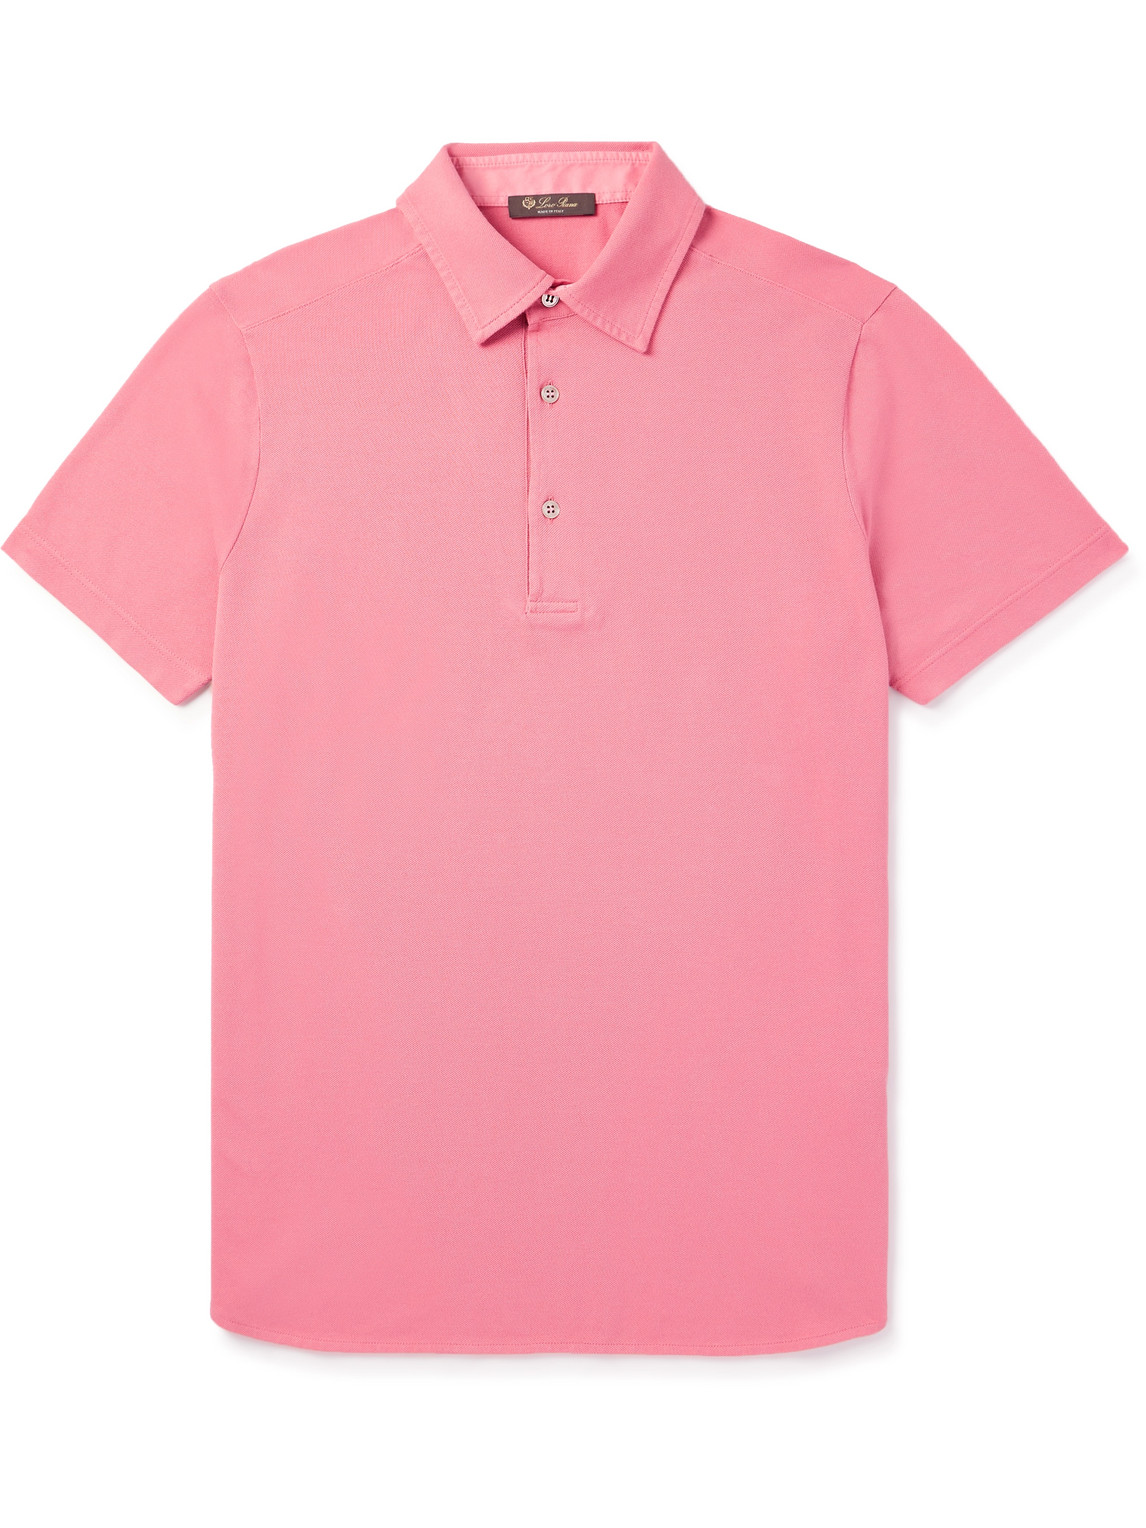 Loro Piana - Cotton-Piqué Polo Shirt - Men - Pink - L von Loro Piana